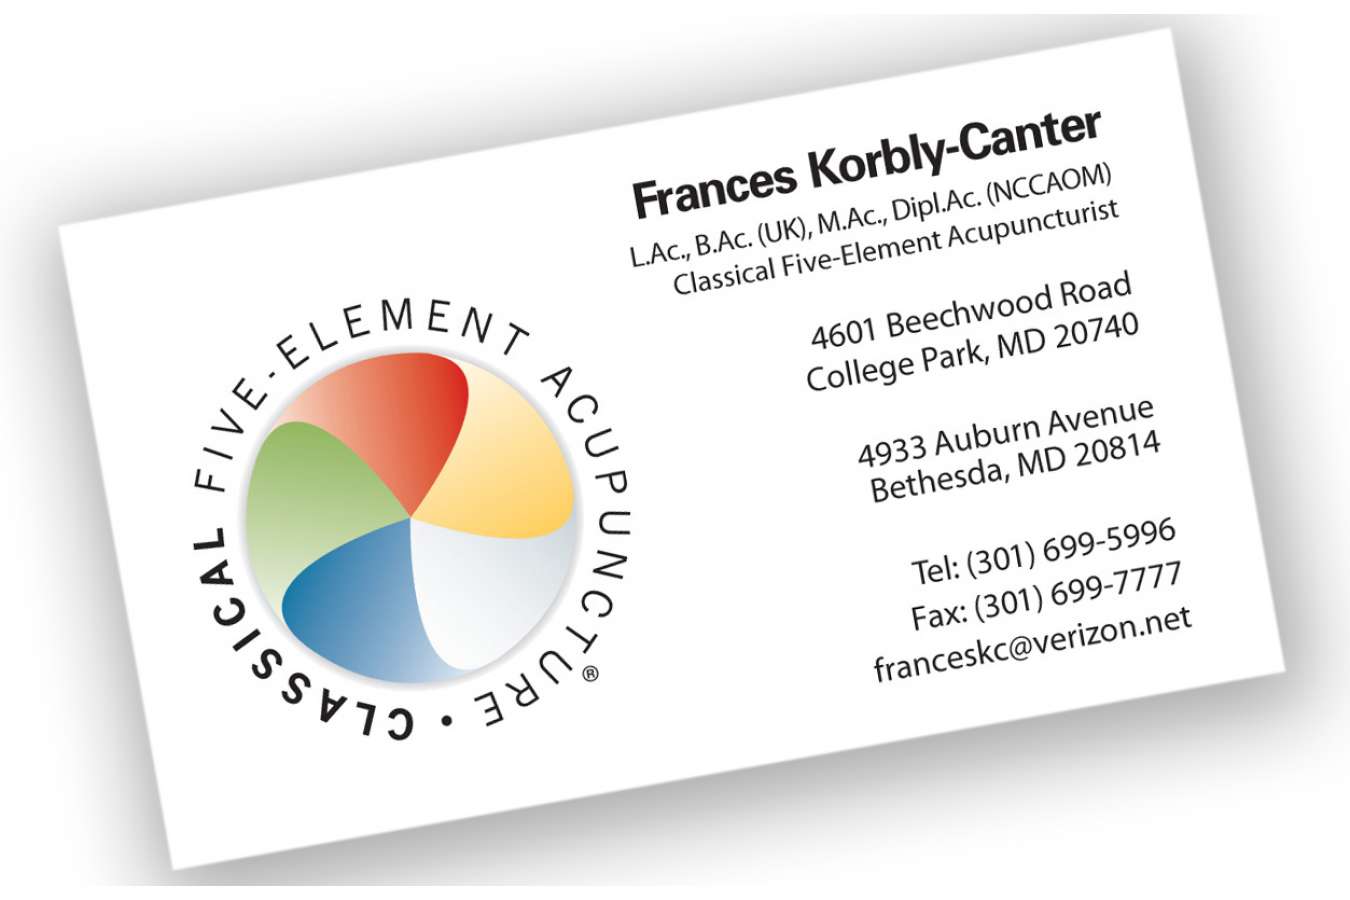 Frances : Business Card for classical five element acupuncturist